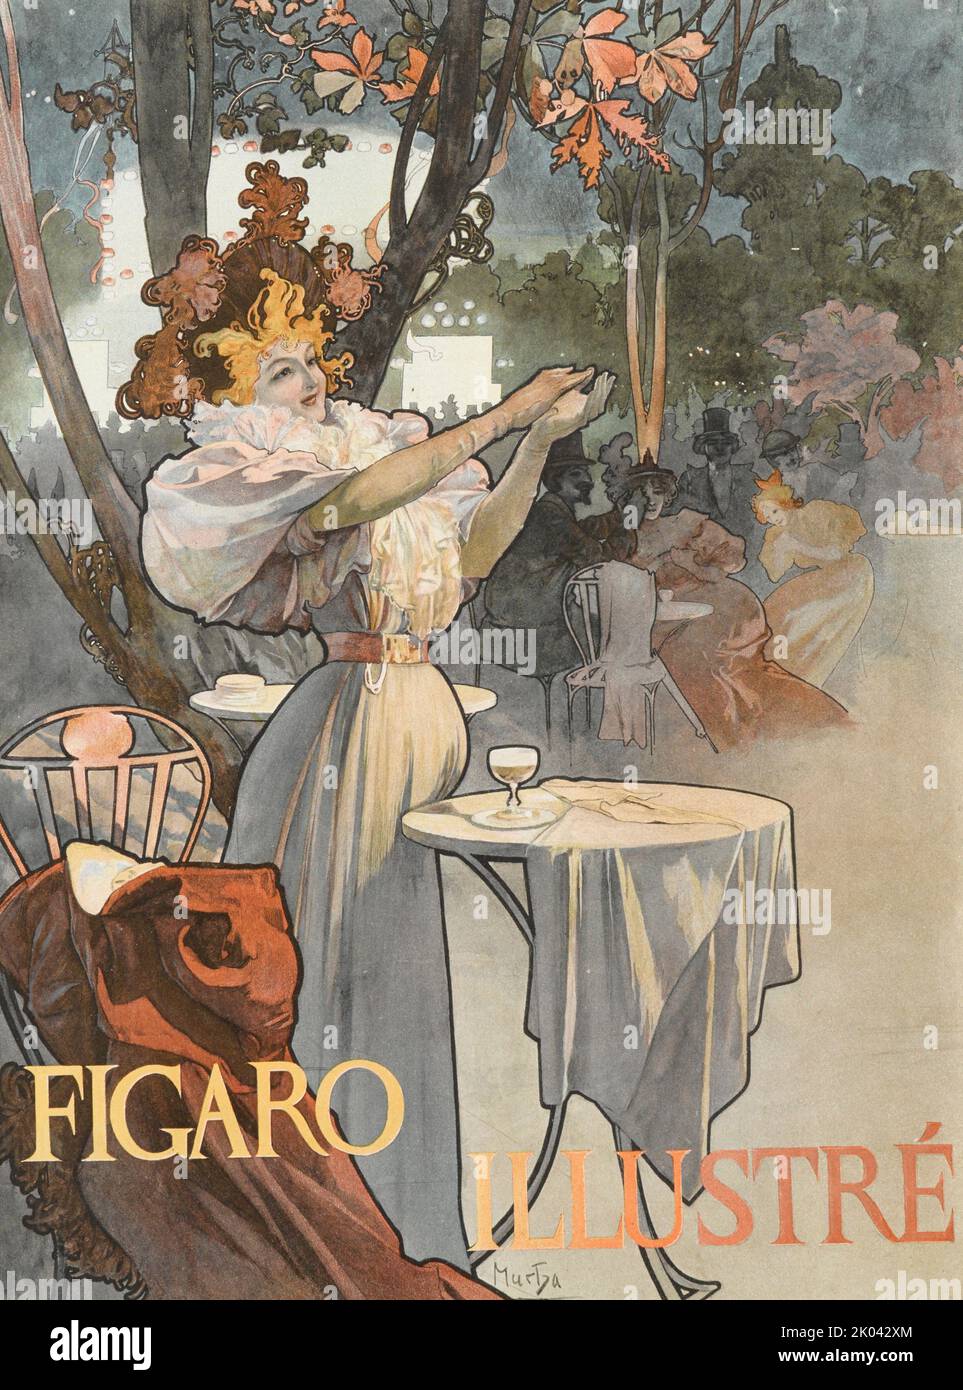 Figaro Illustration Magazine Cover, 1896. Juni 1896. Private Sammlung. Stockfoto